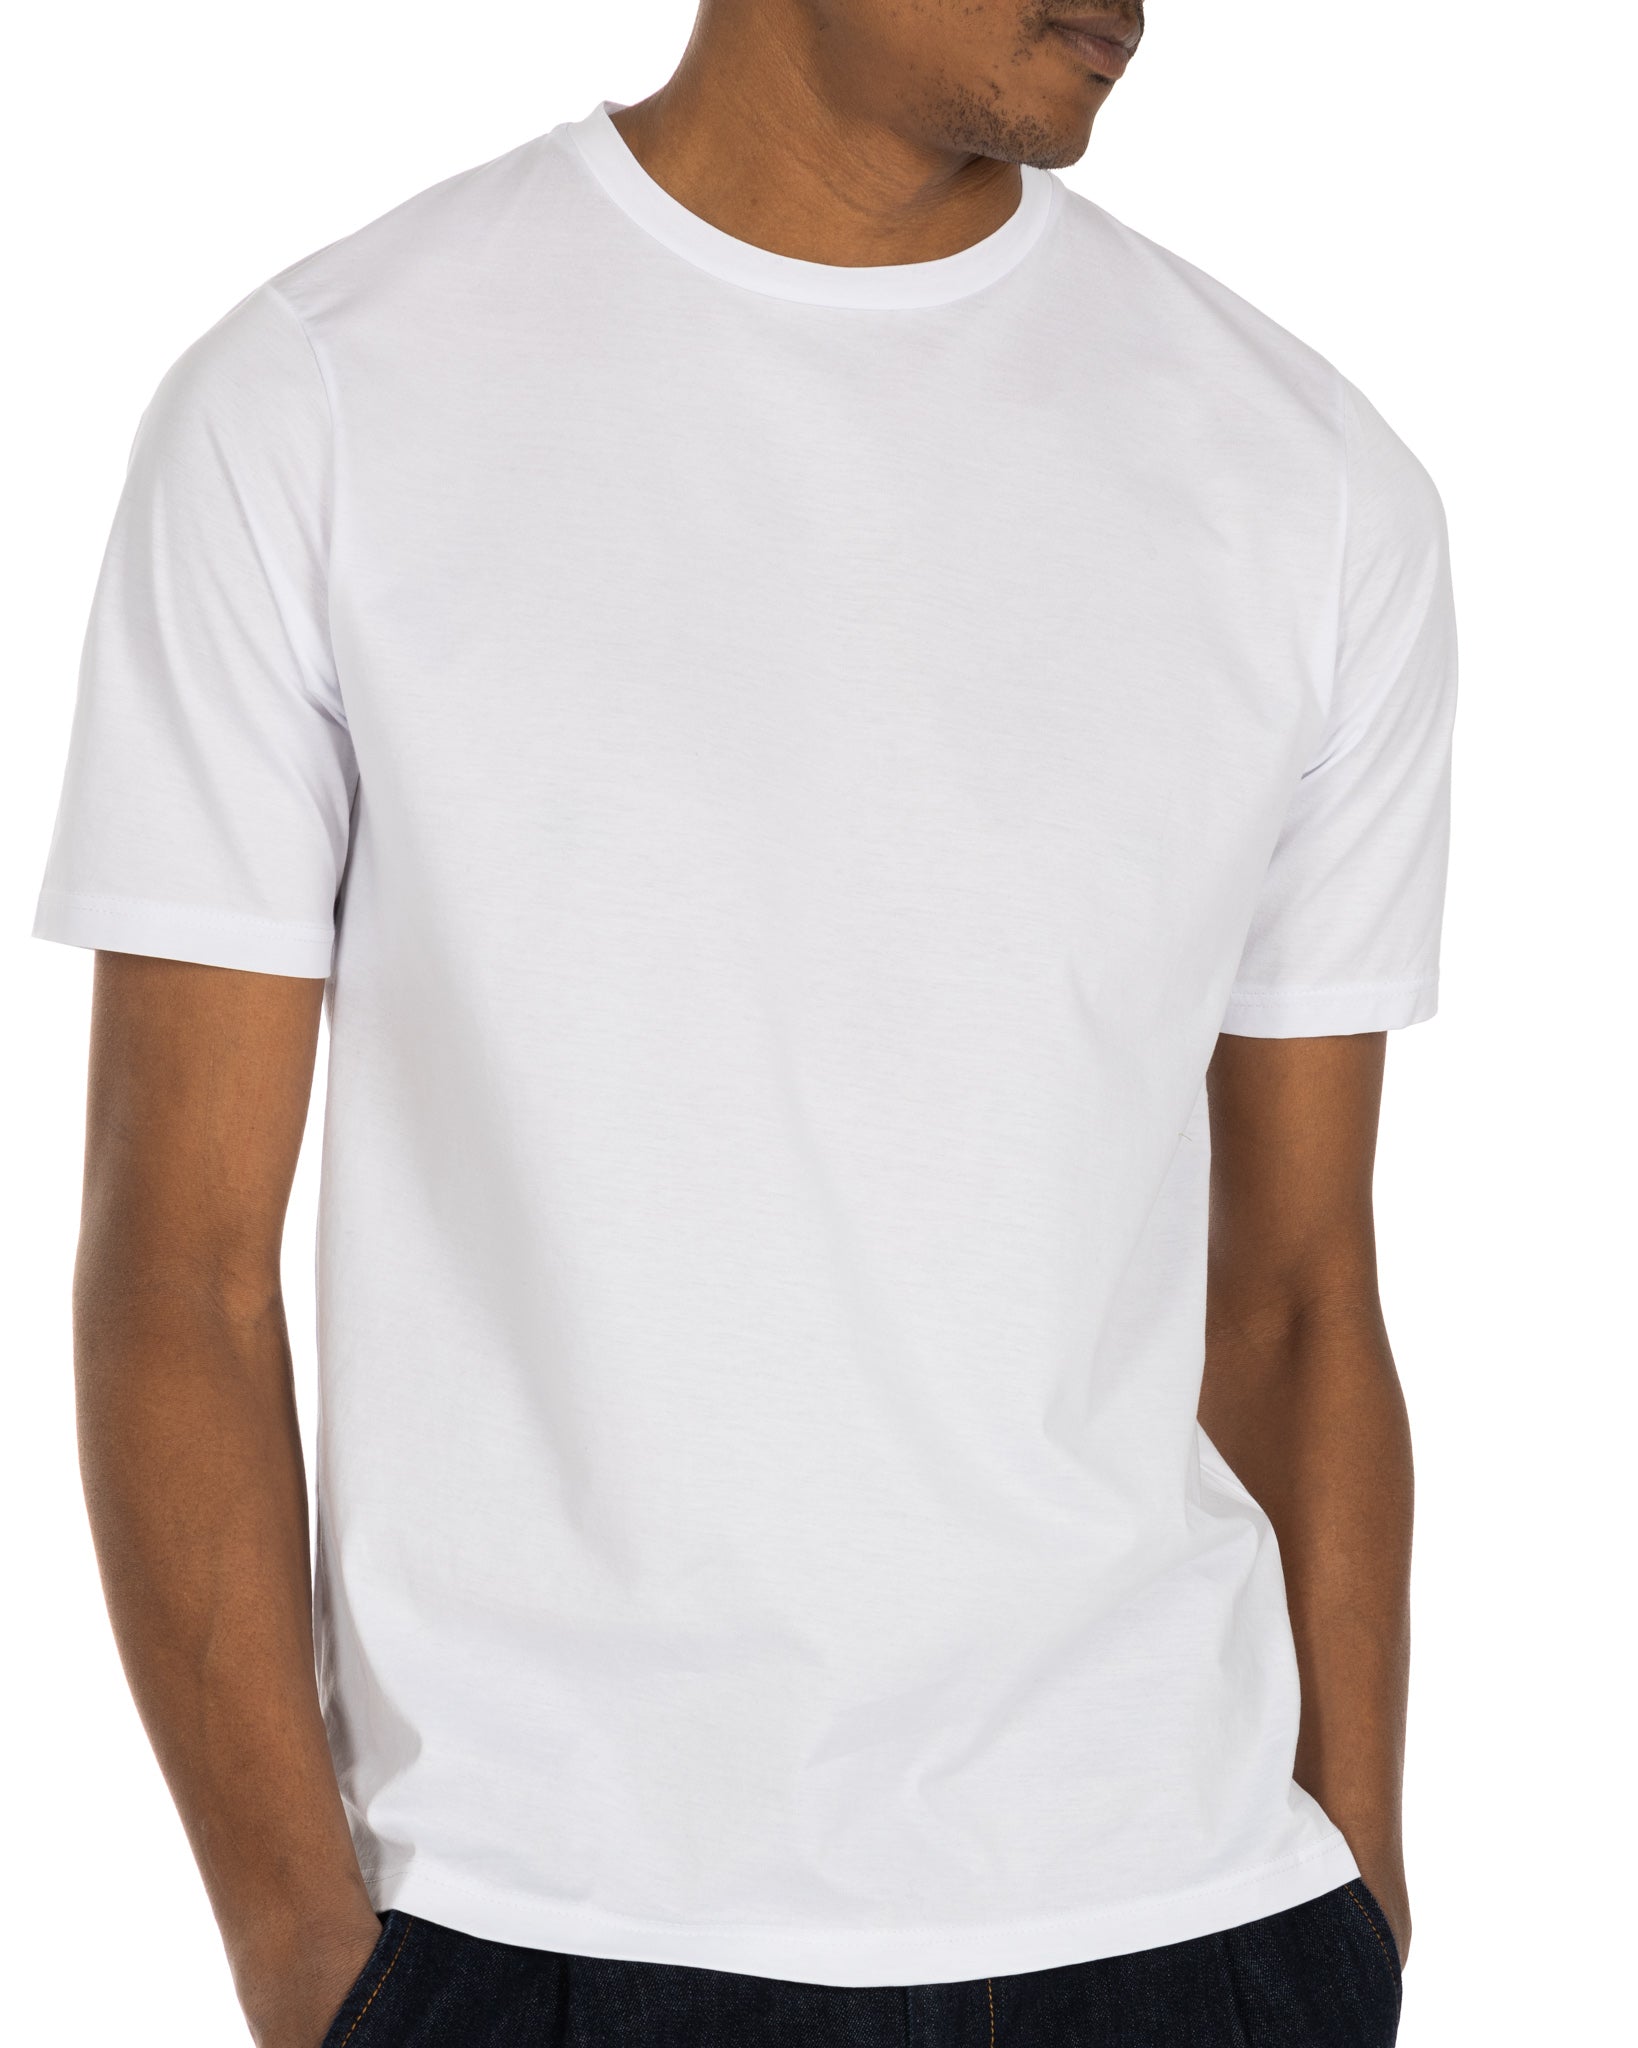 Glasgow - white lisle t-shirt